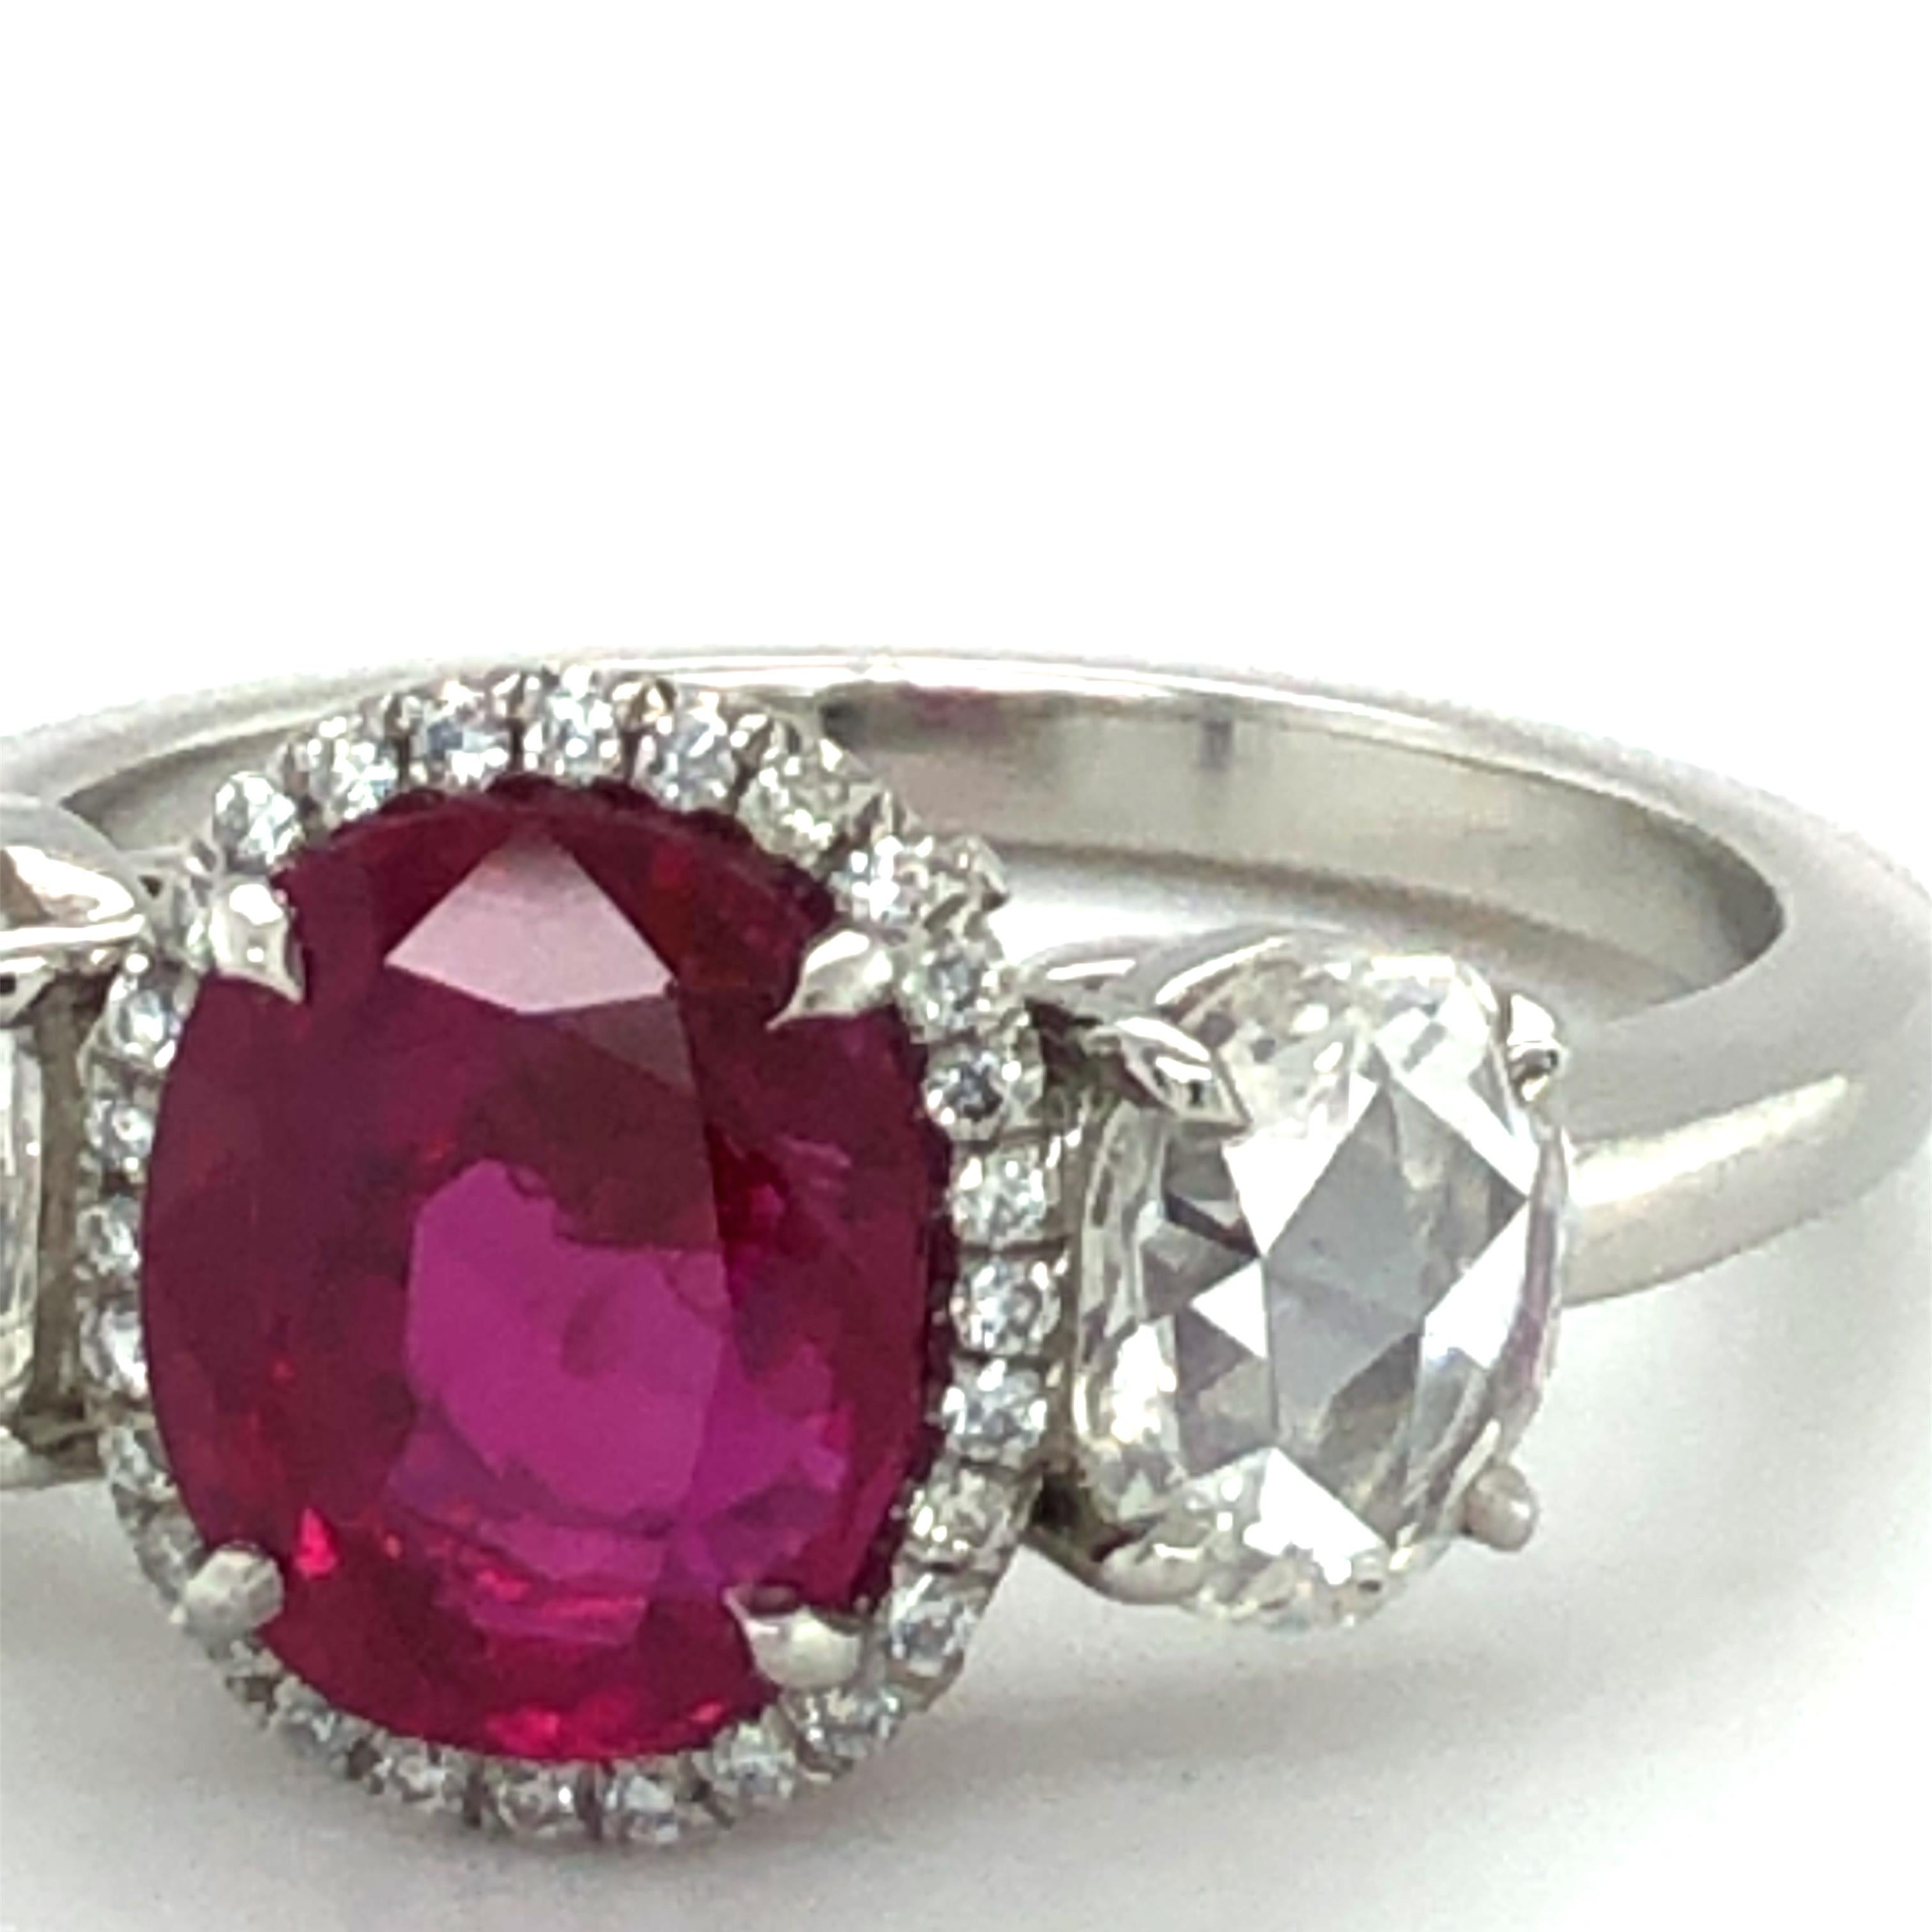 Superb 2.73 Carat Burma Ruby and Diamond Ring in Platinum 950 4